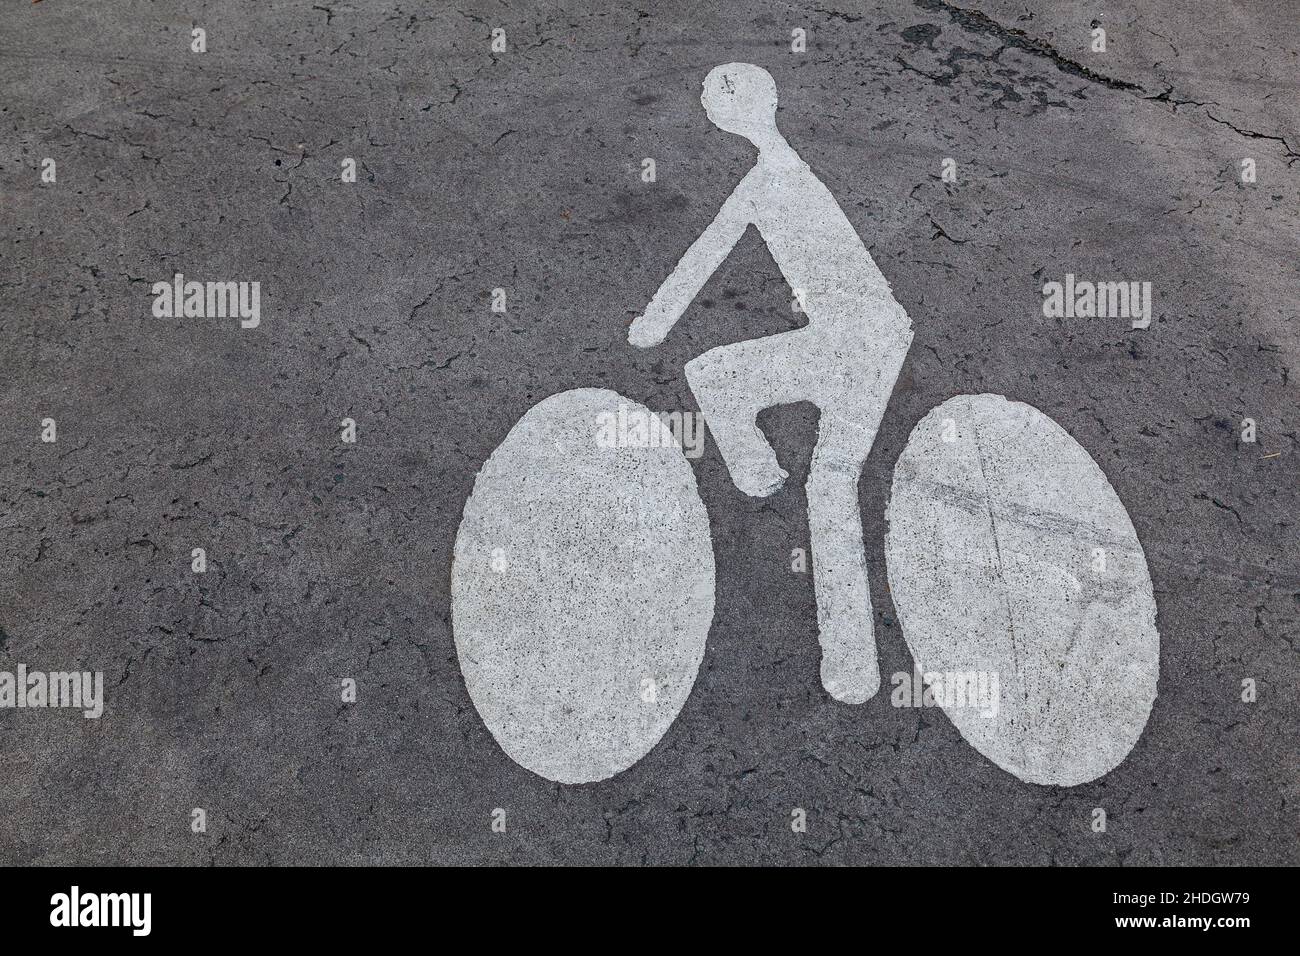 pictogram, bike lane, pictograms, bicycle lane, bike lanes, bike path, cycle way Stock Photo